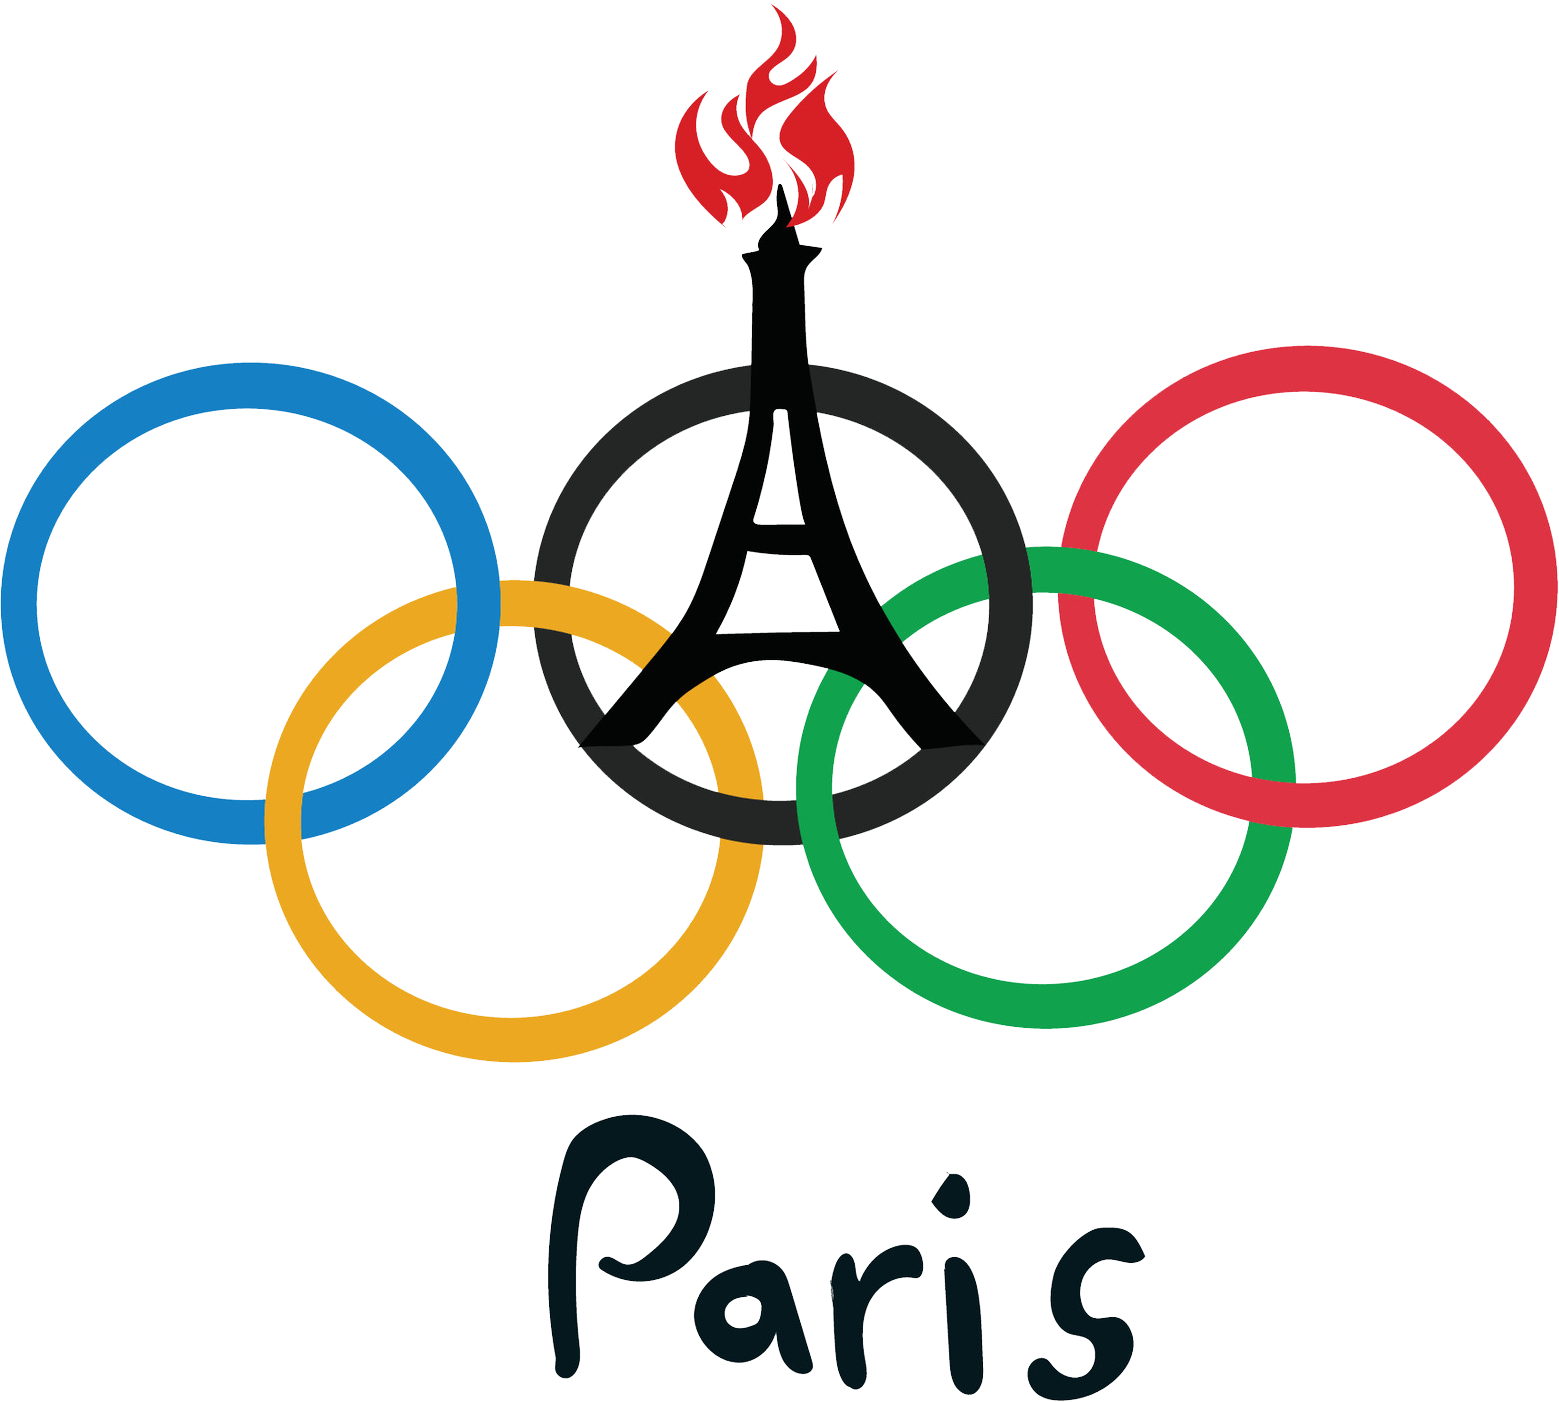 Paris 2024 Olympics logo